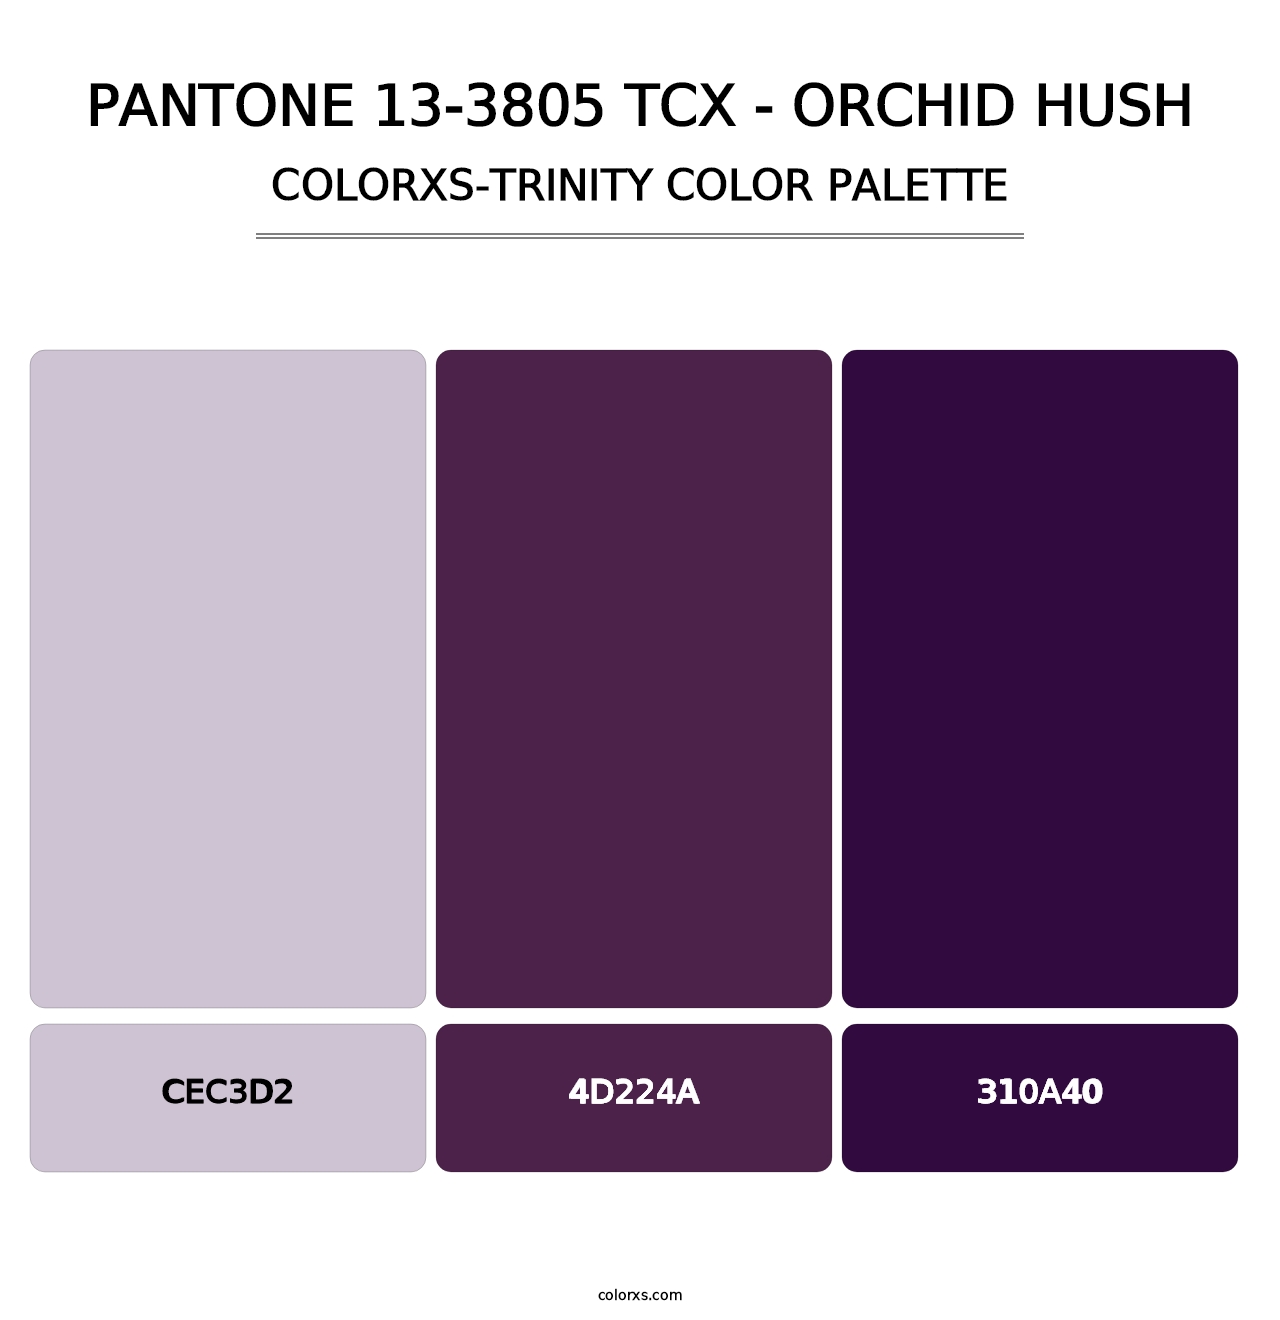 PANTONE 13-3805 TCX - Orchid Hush - Colorxs Trinity Palette